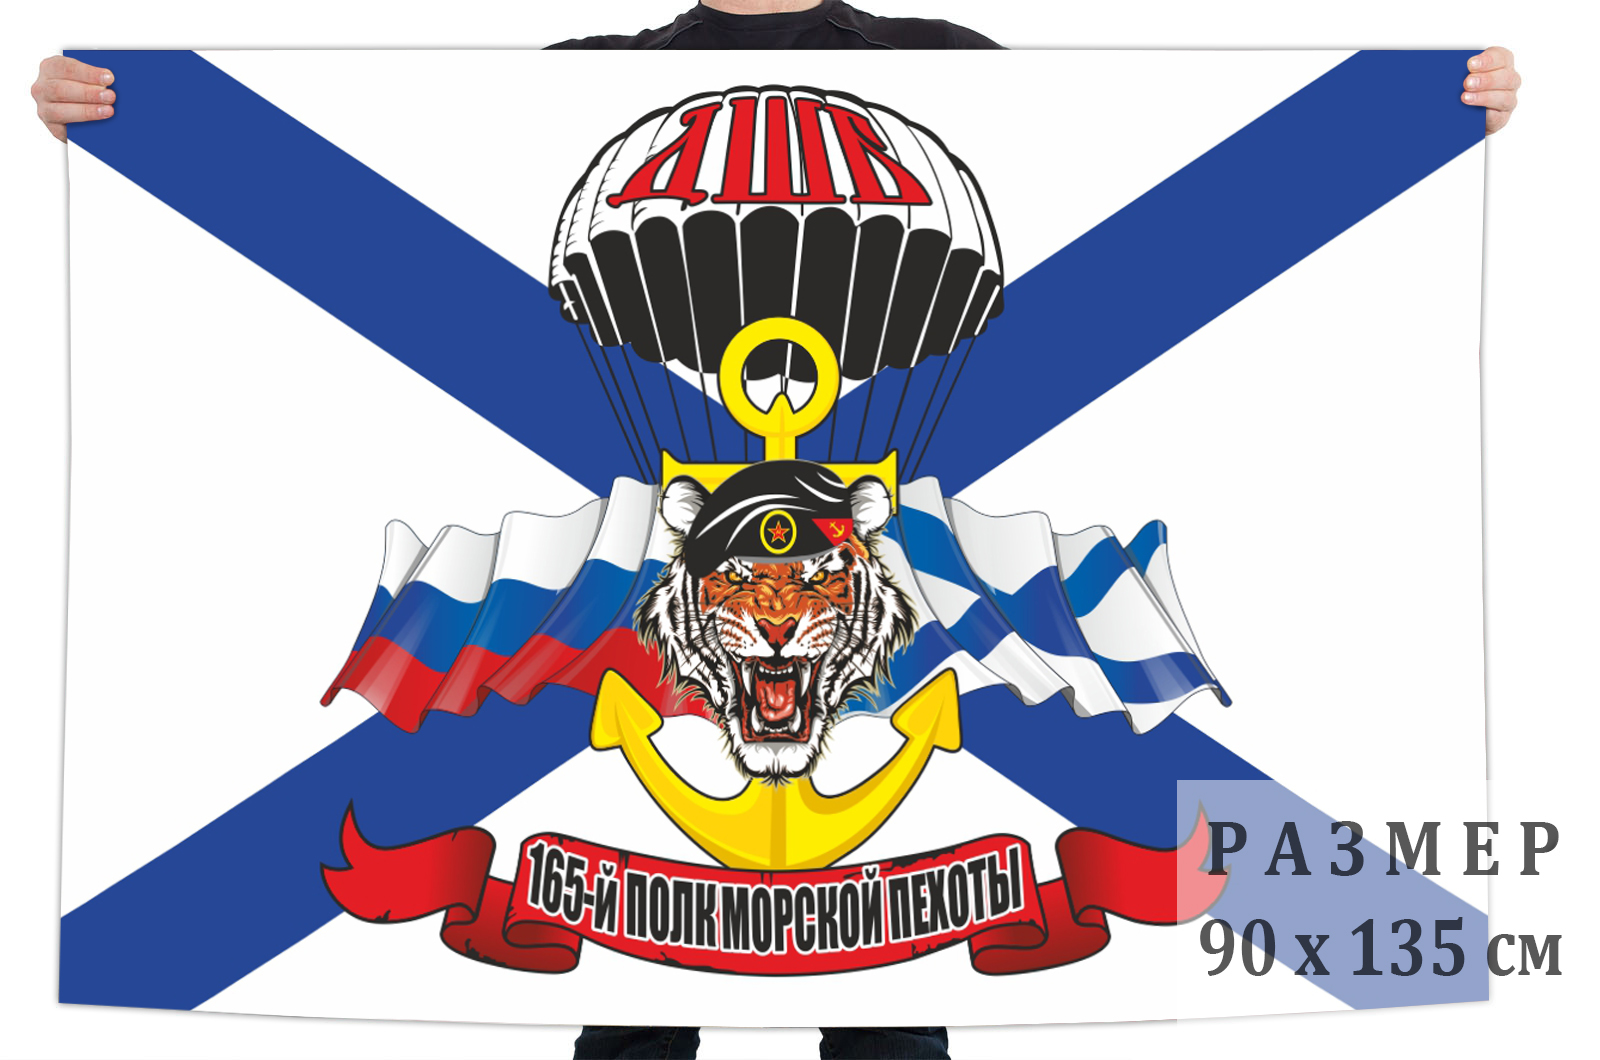 Флаг ДШБ 165 полка морской пехоты